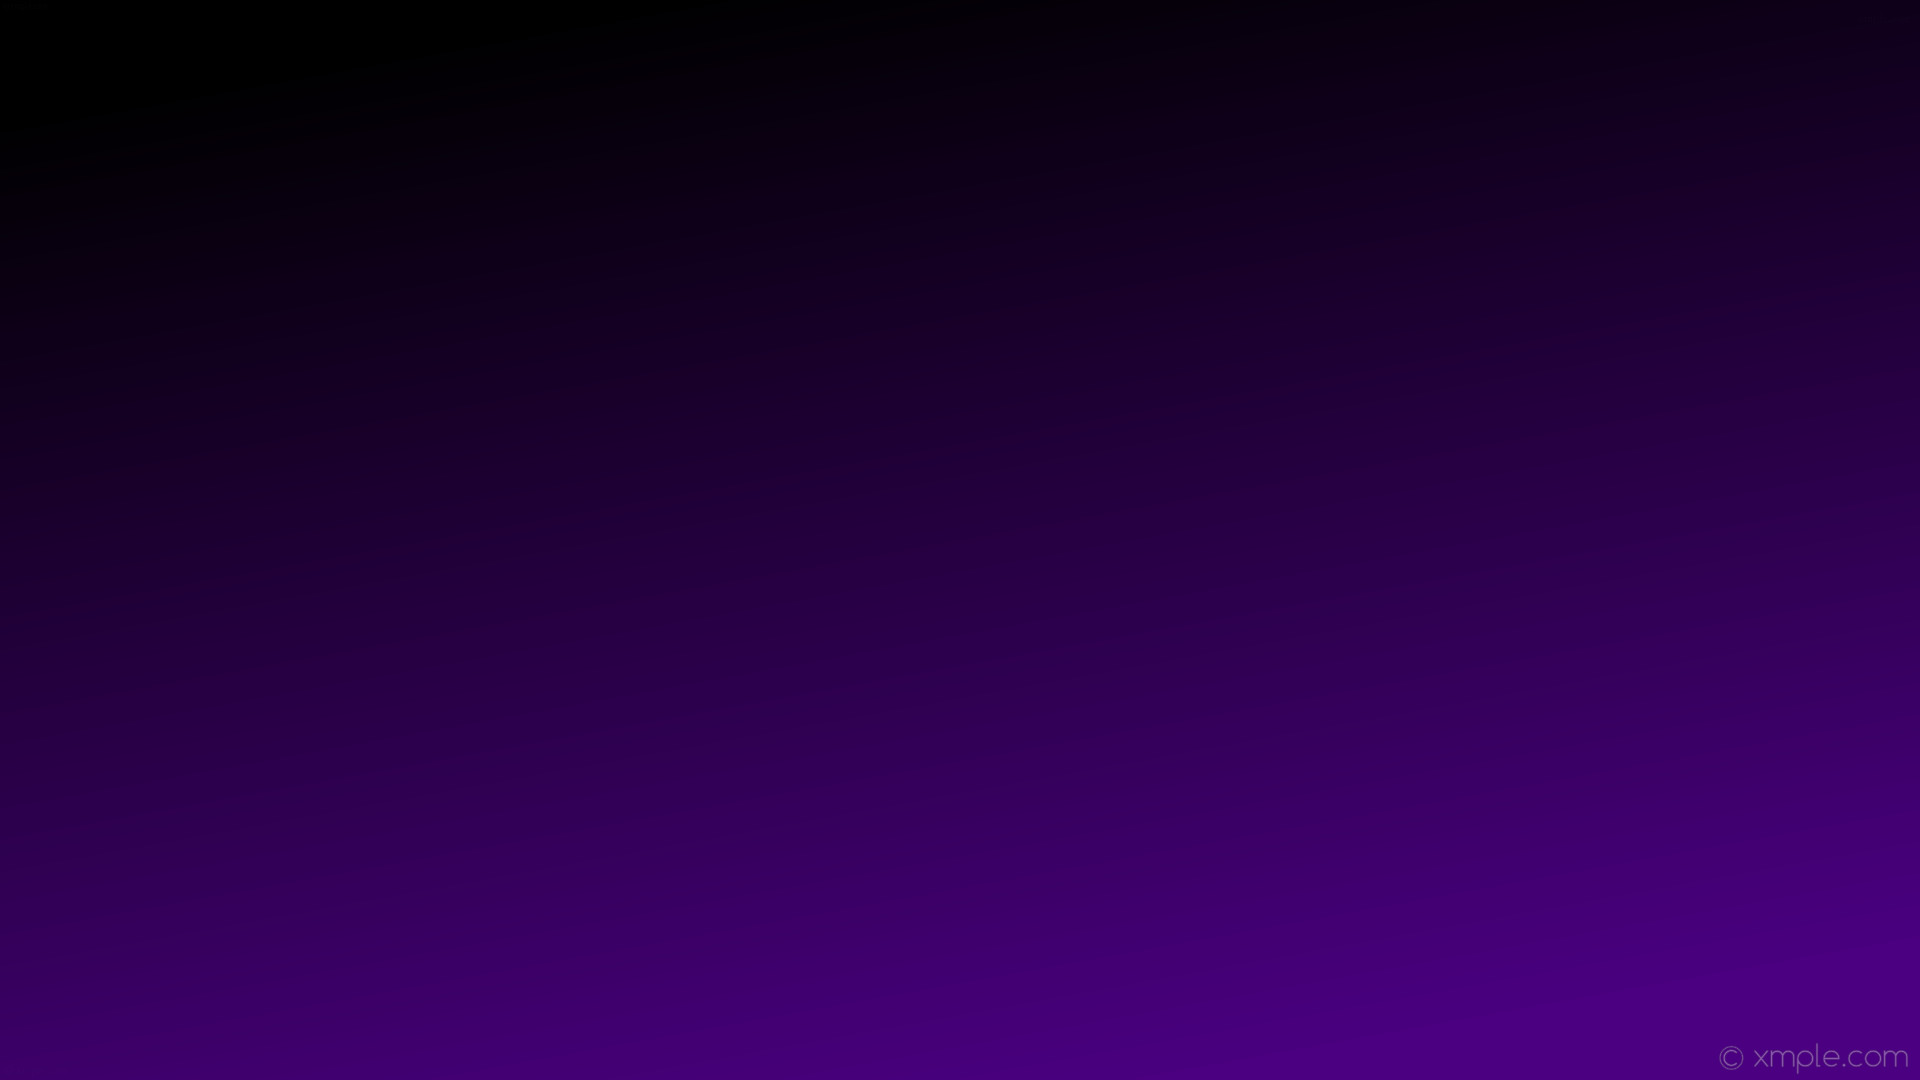 1920x1080 wallpaper gradient black purple linear indigo #000000 #4b0082 120Â°